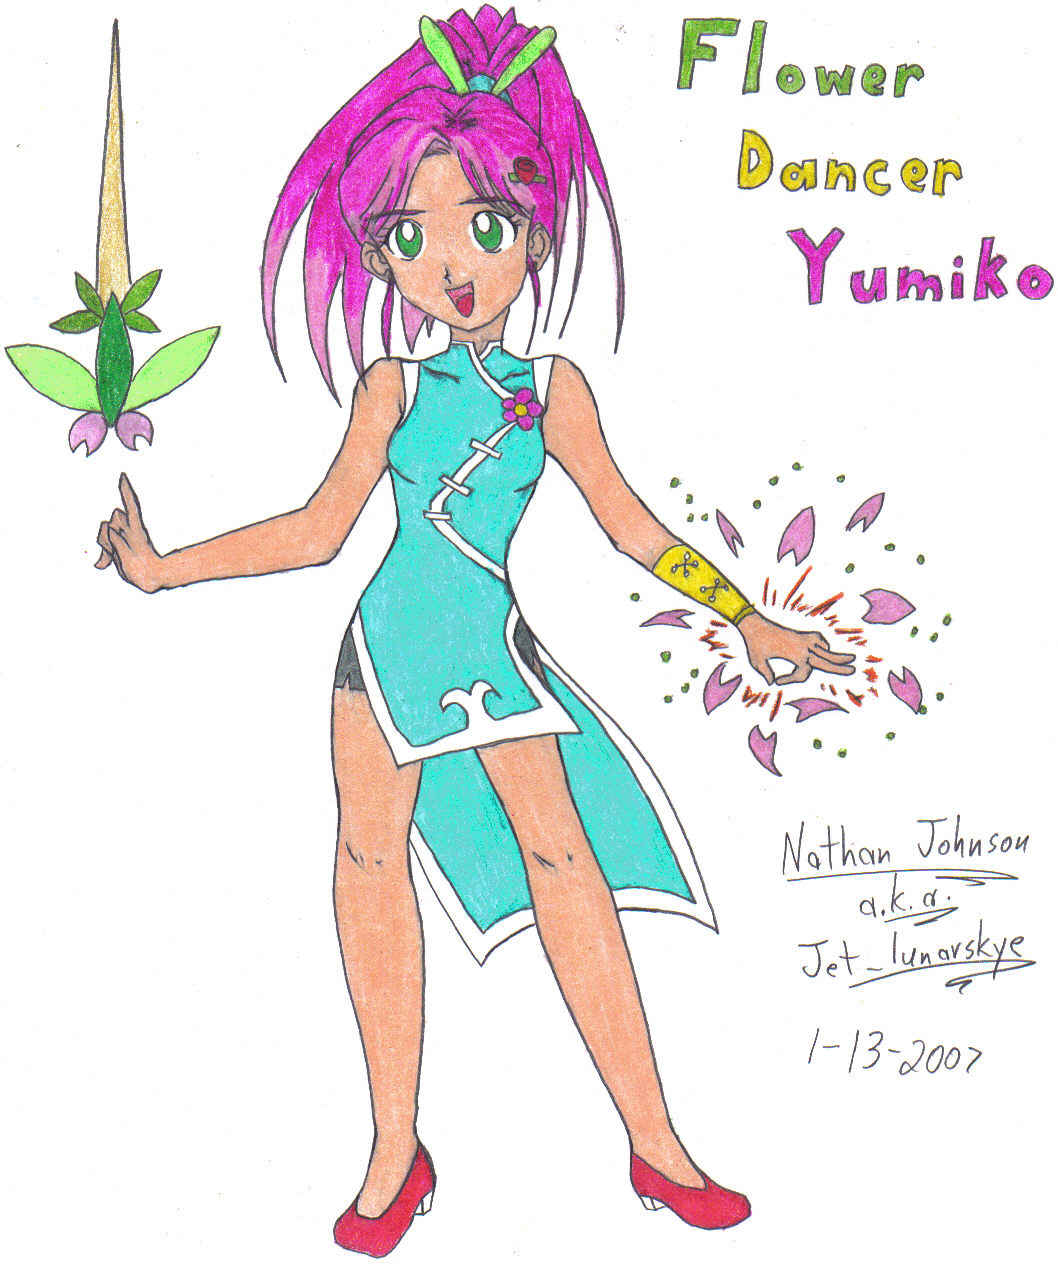 Flower Dancer Yumiko by Jet_lunarskye